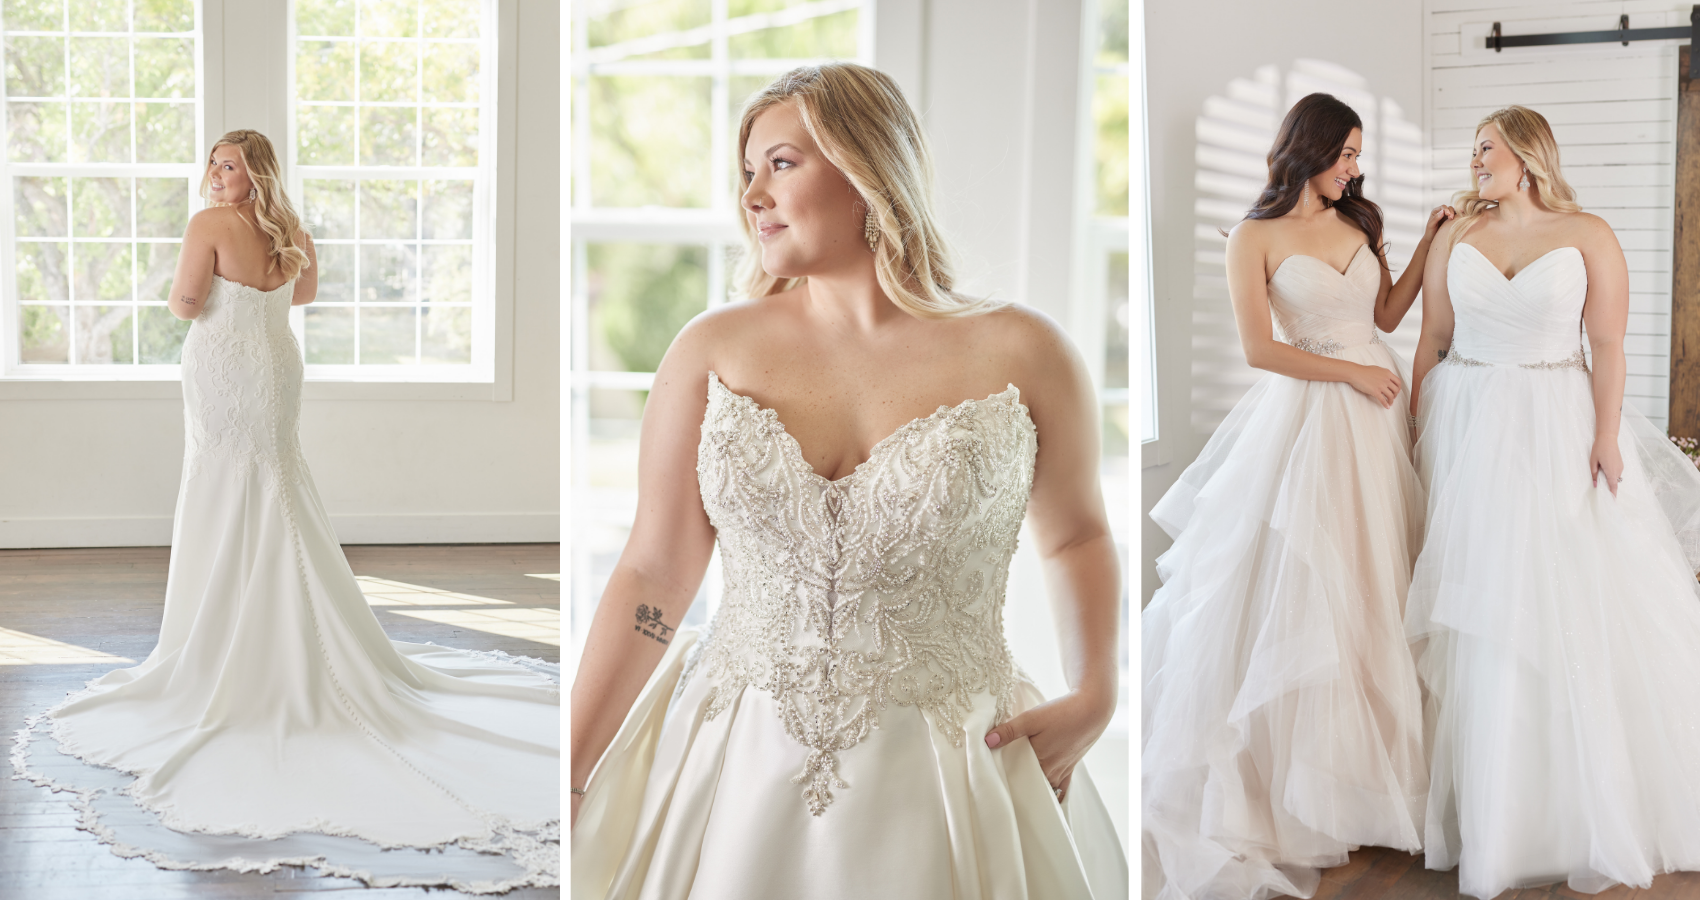 Classic Wedding Dresses Blog HEader With Brides Wearing Kimora By Sottero And Midgley, Yasmin By Maggie Sottero, And Weston By Sottero And Midgley